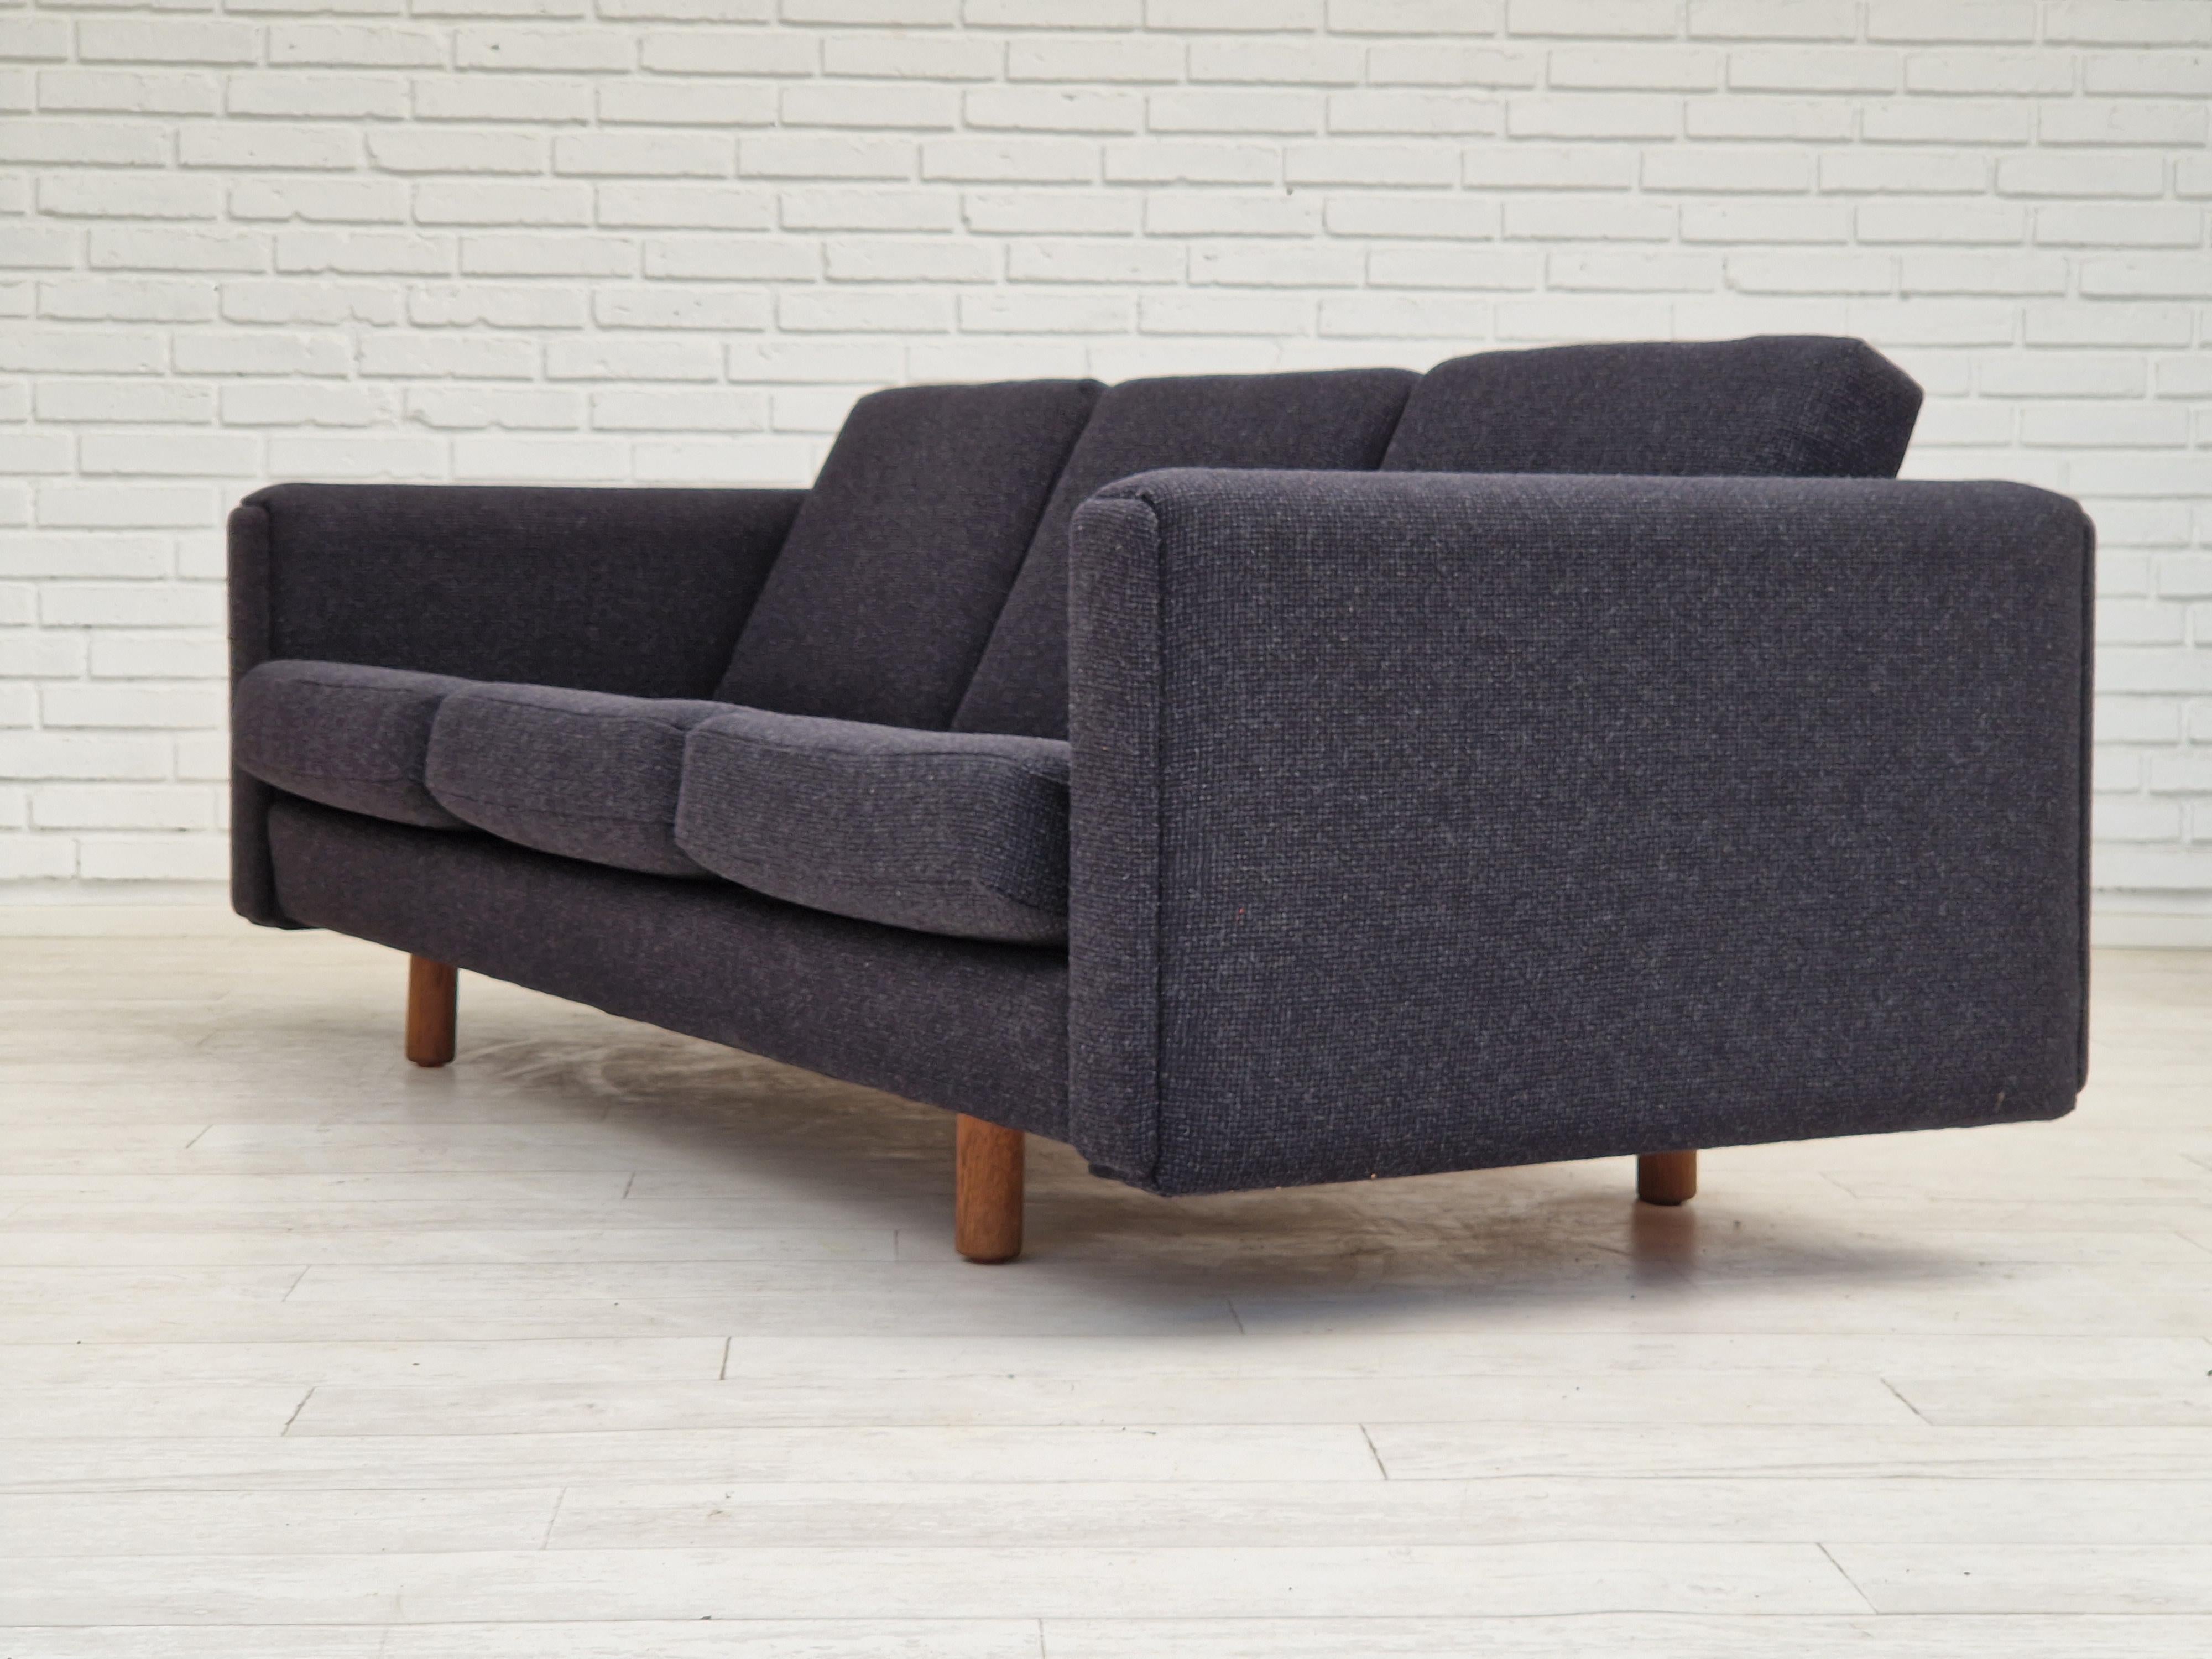 1970s, Danish design by H.J. Wegner, model GE300, reupholstered sofa. For Sale 4